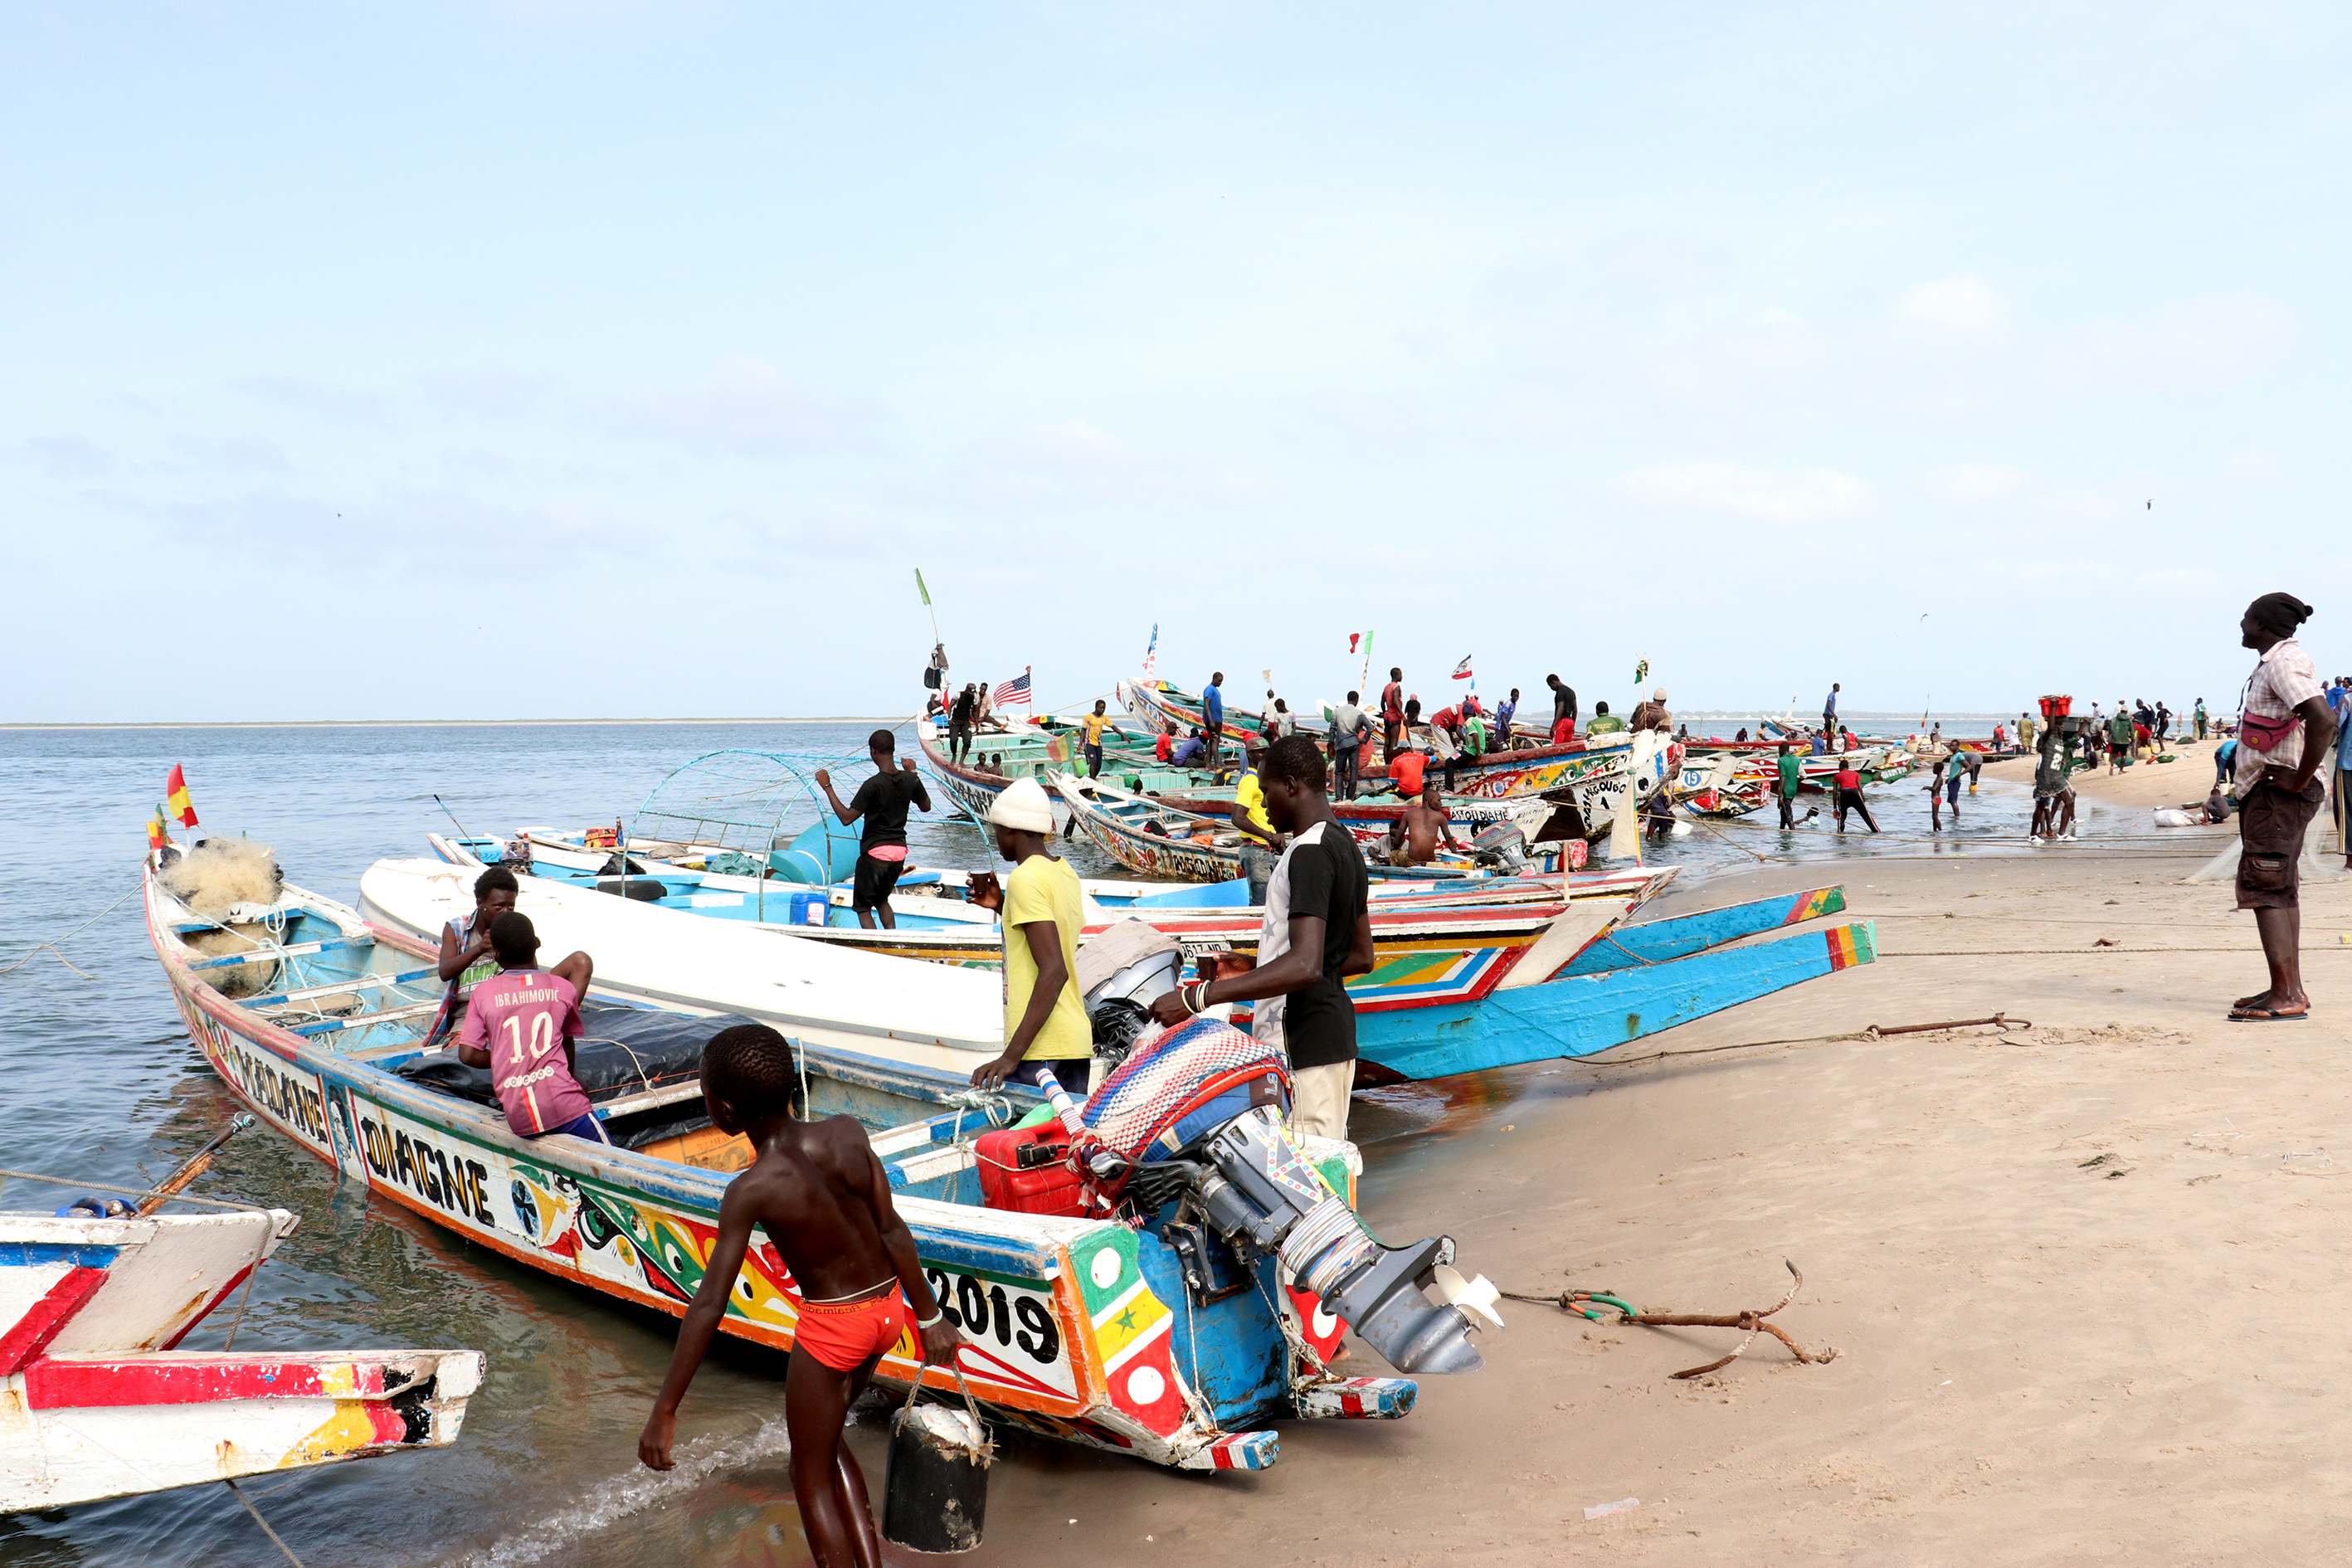 Senegalese fishermen of the Saloum Delta